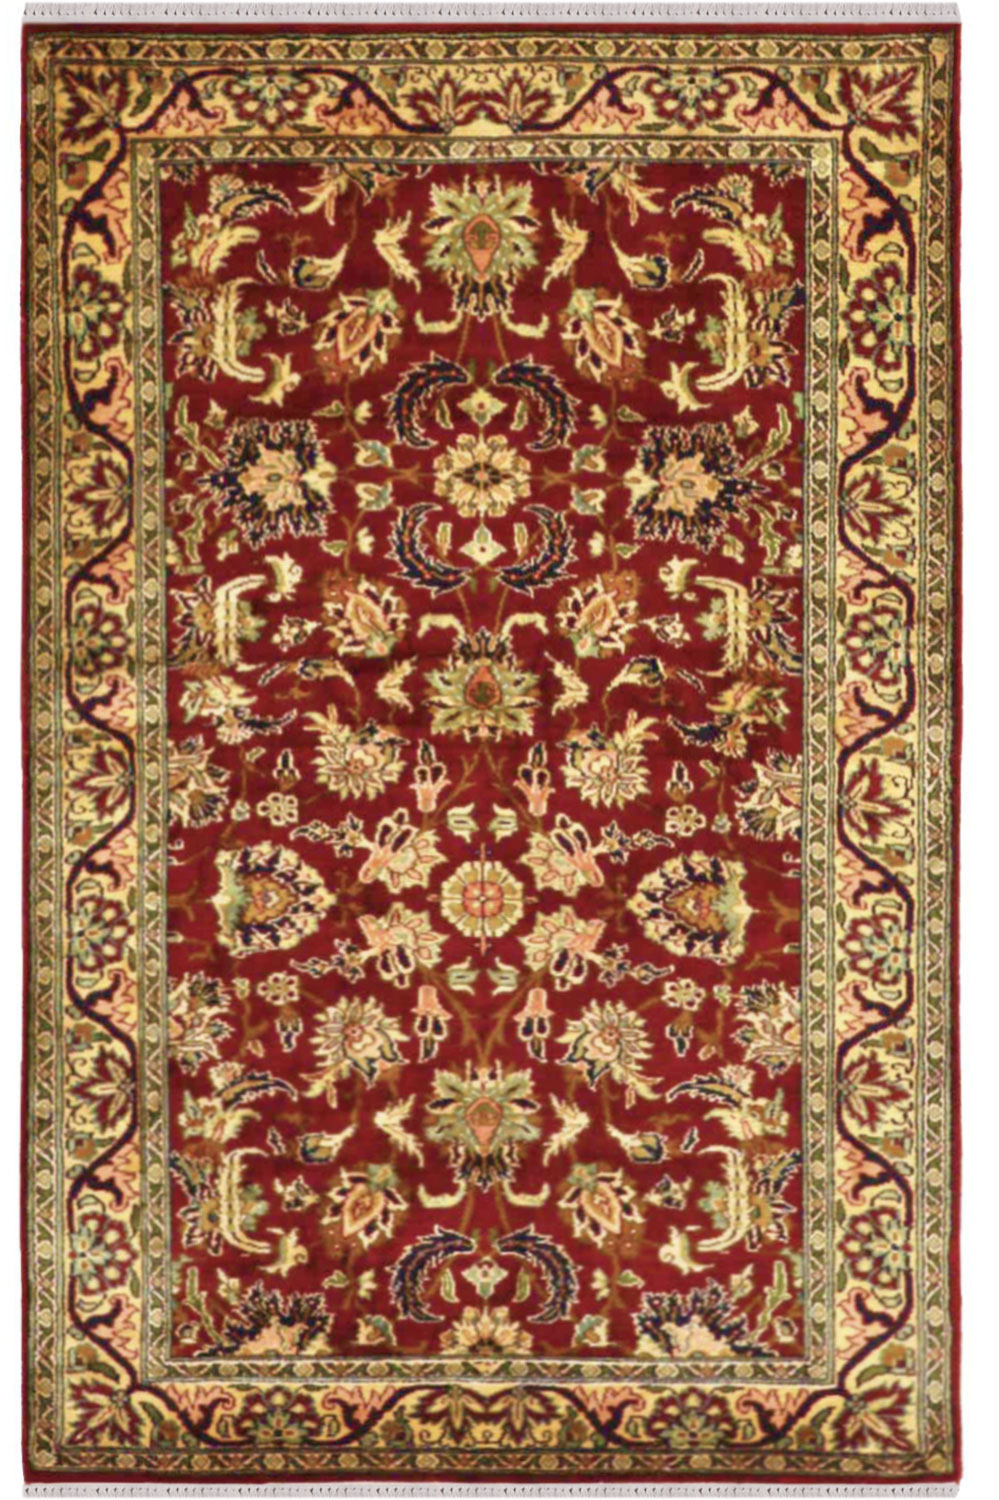 Purchase Applique Kashan Silk Carpet at best Price from yak Carpet Delhi